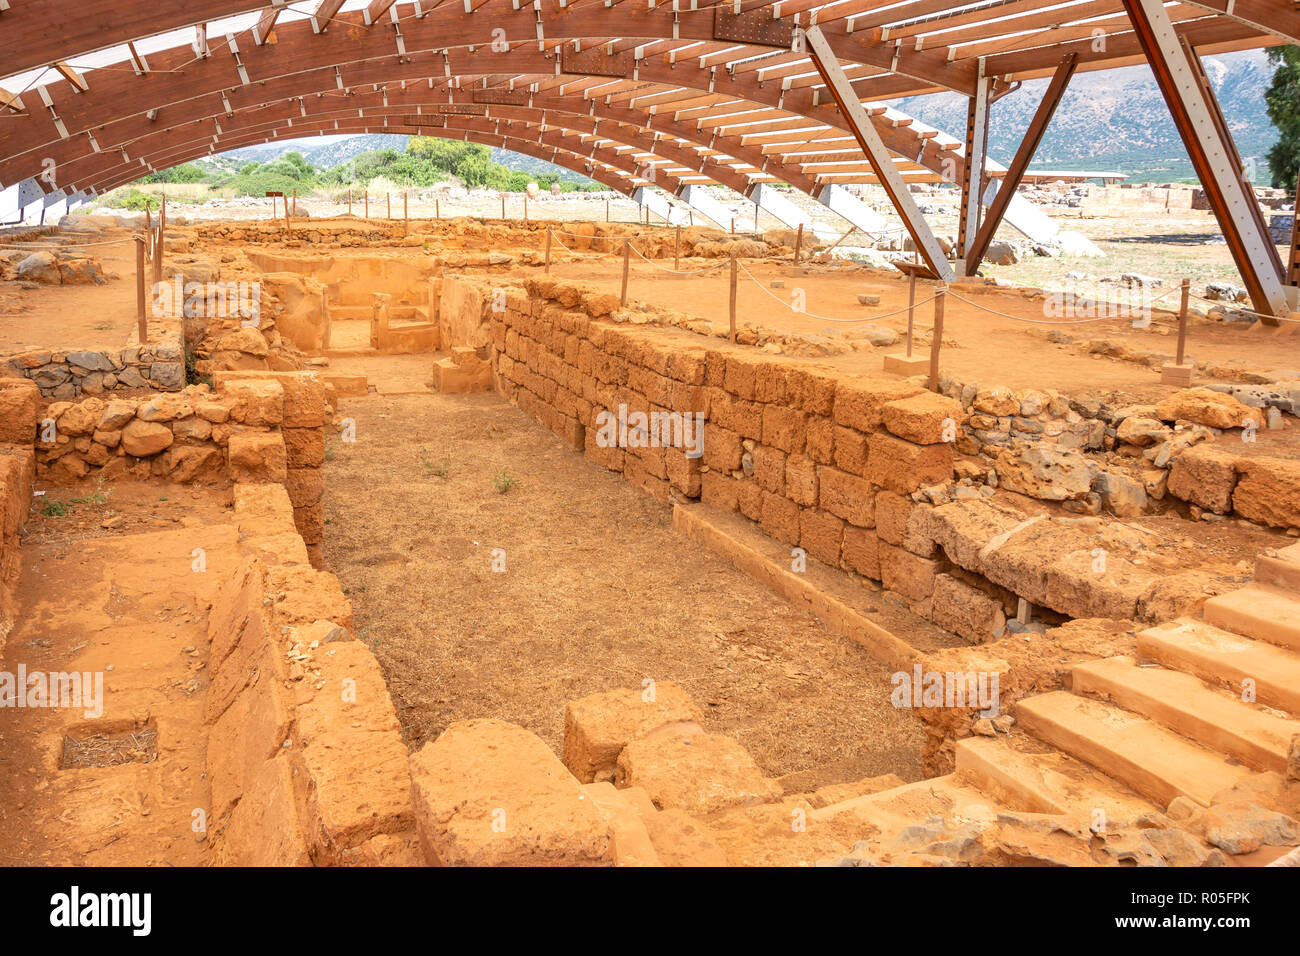 Archäologische Stätte der Säule Krypta, Minoischer Palast von Malia Malia (Mallia), Irakleio Region, Kreta (Kriti), Griechenland Stockfoto